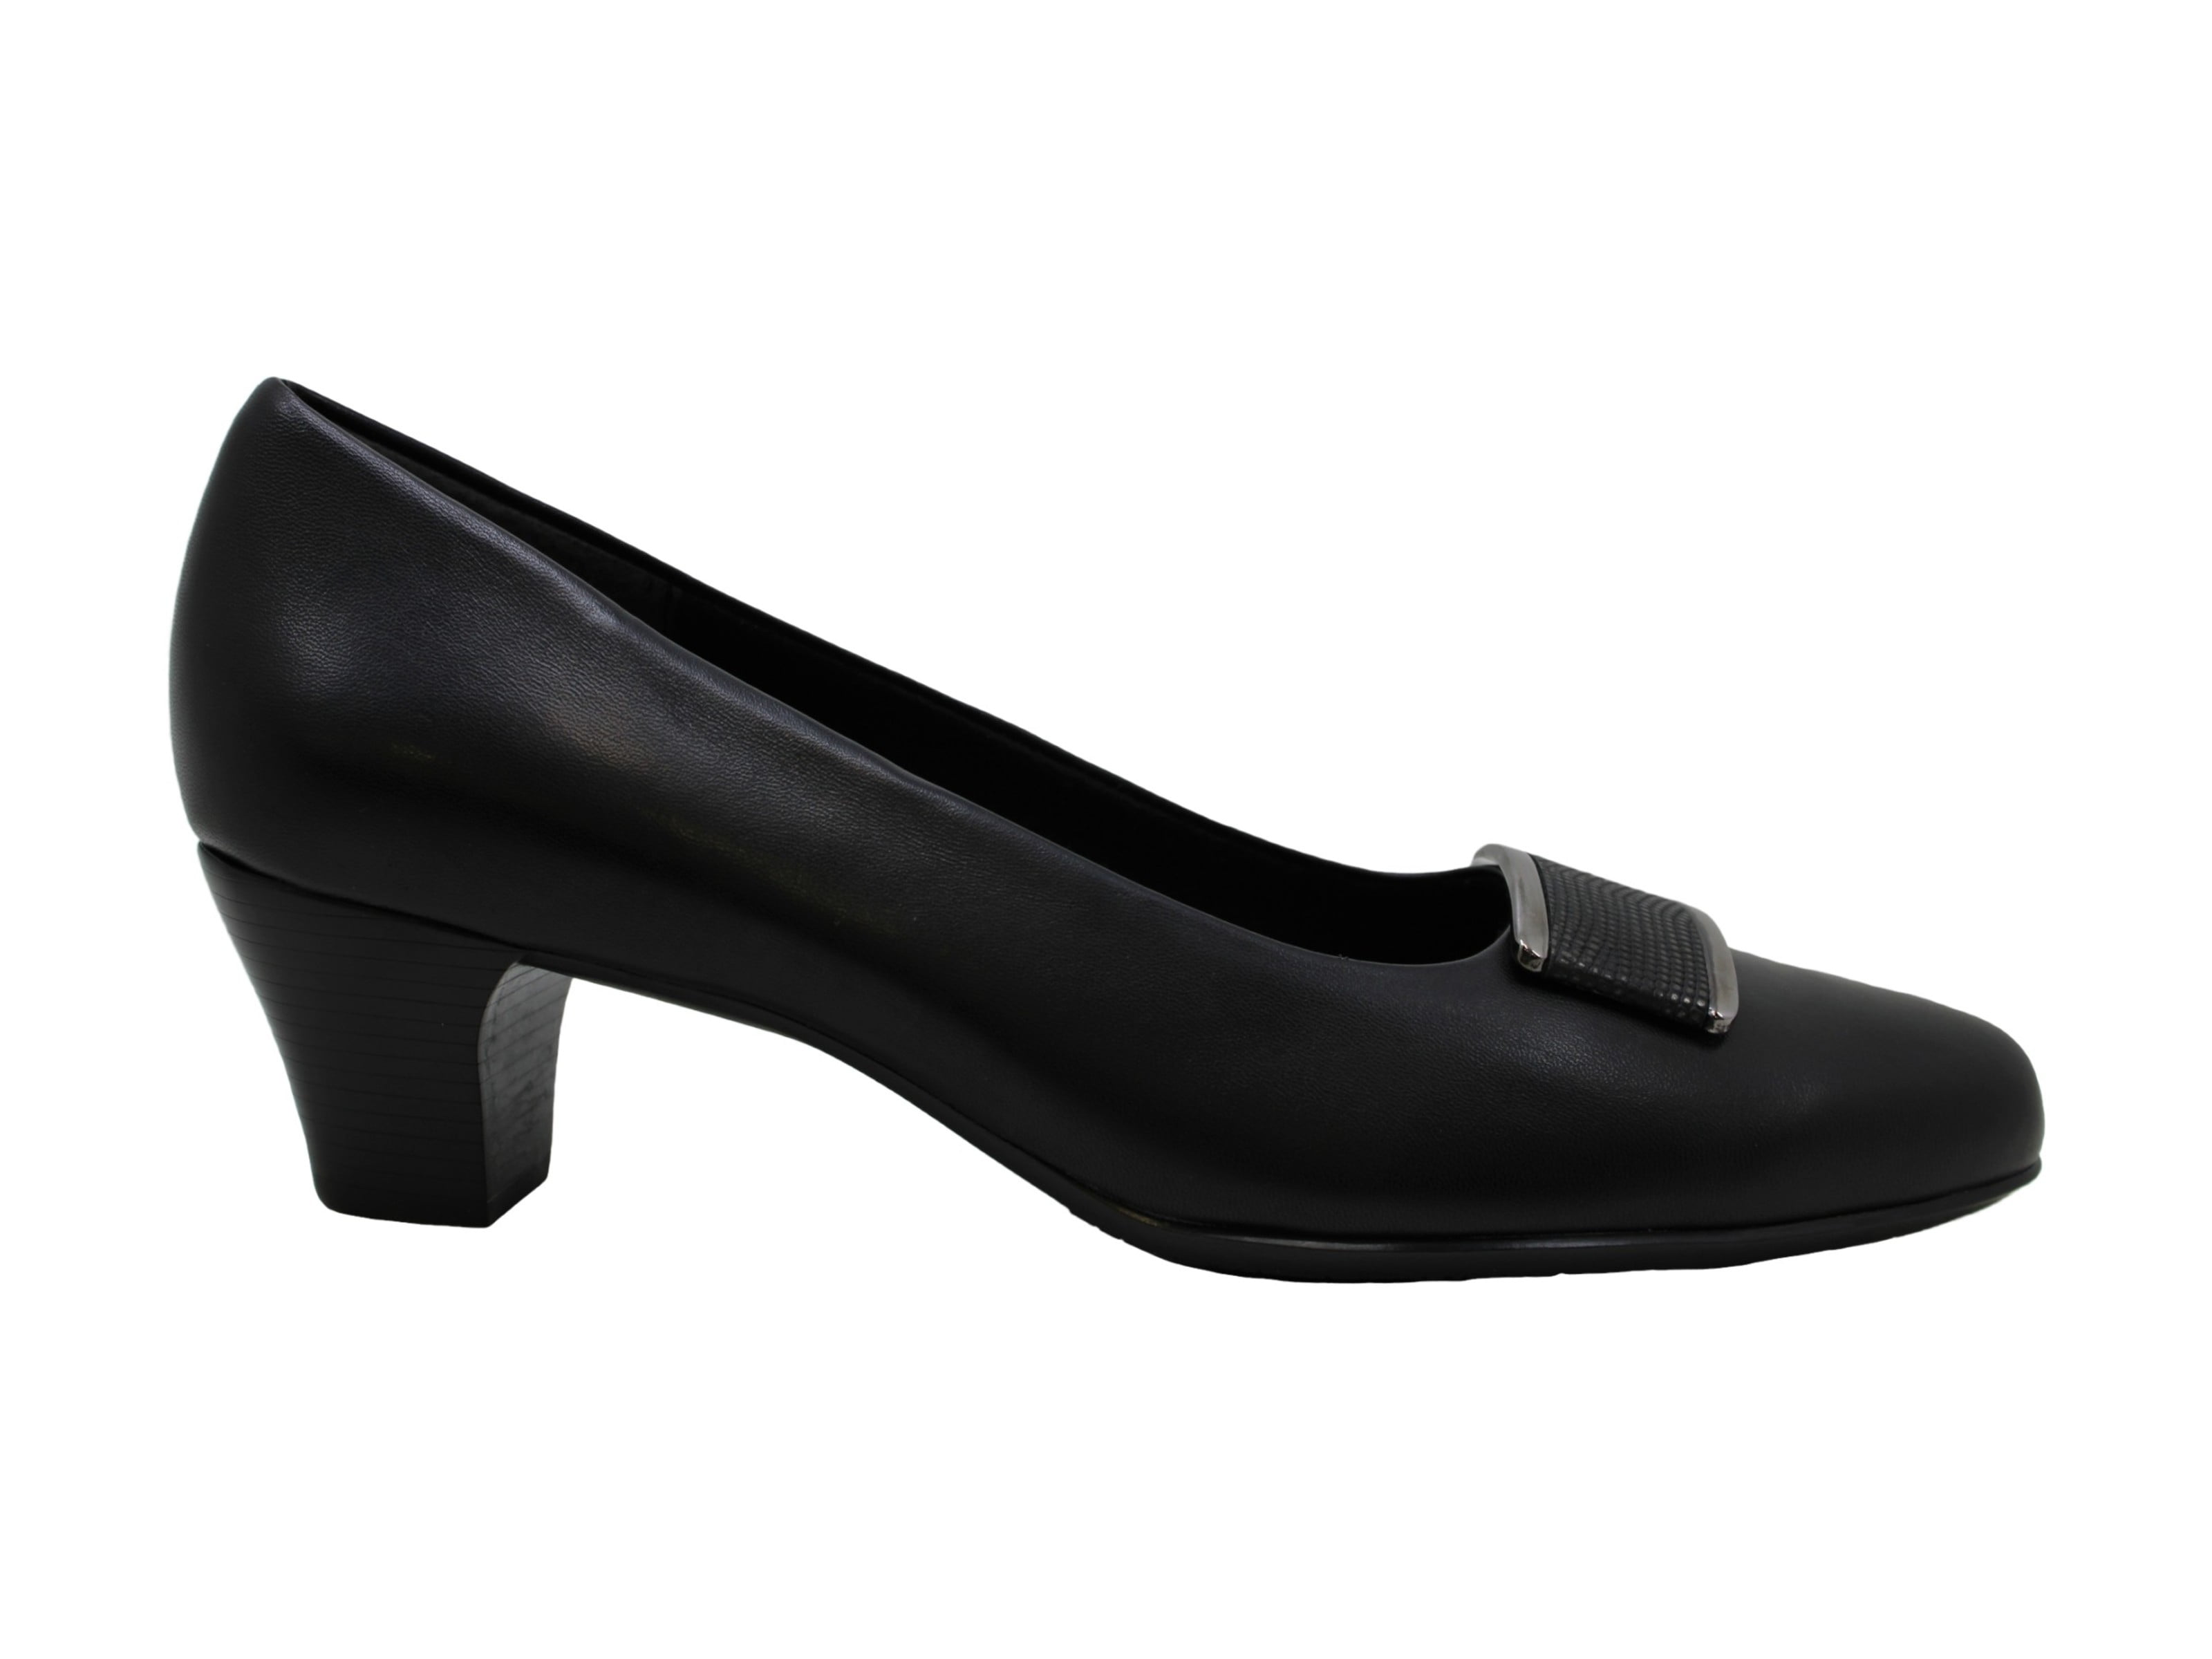 MUNRO AMERICAN Black Fabric Black Patent Trim Peep Toe Pumps Heels Size 7 N 